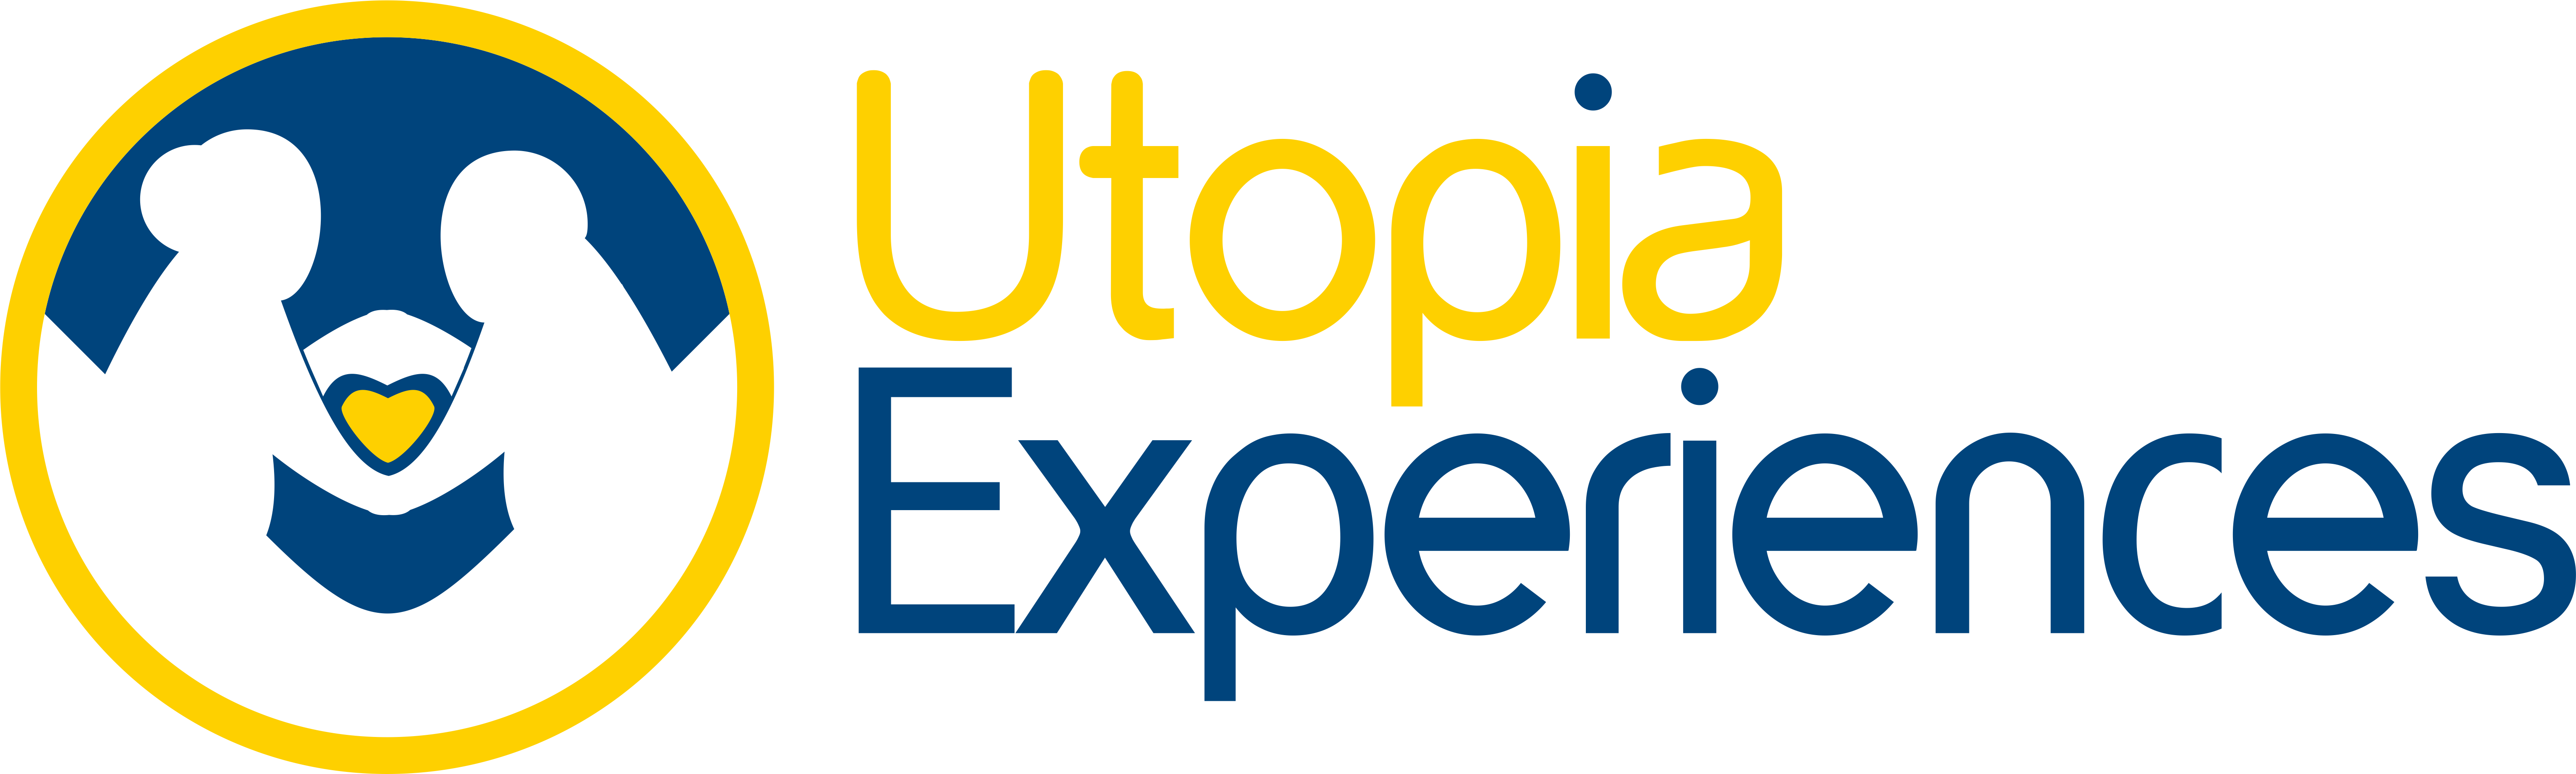 Utopia Experiences colored logo
